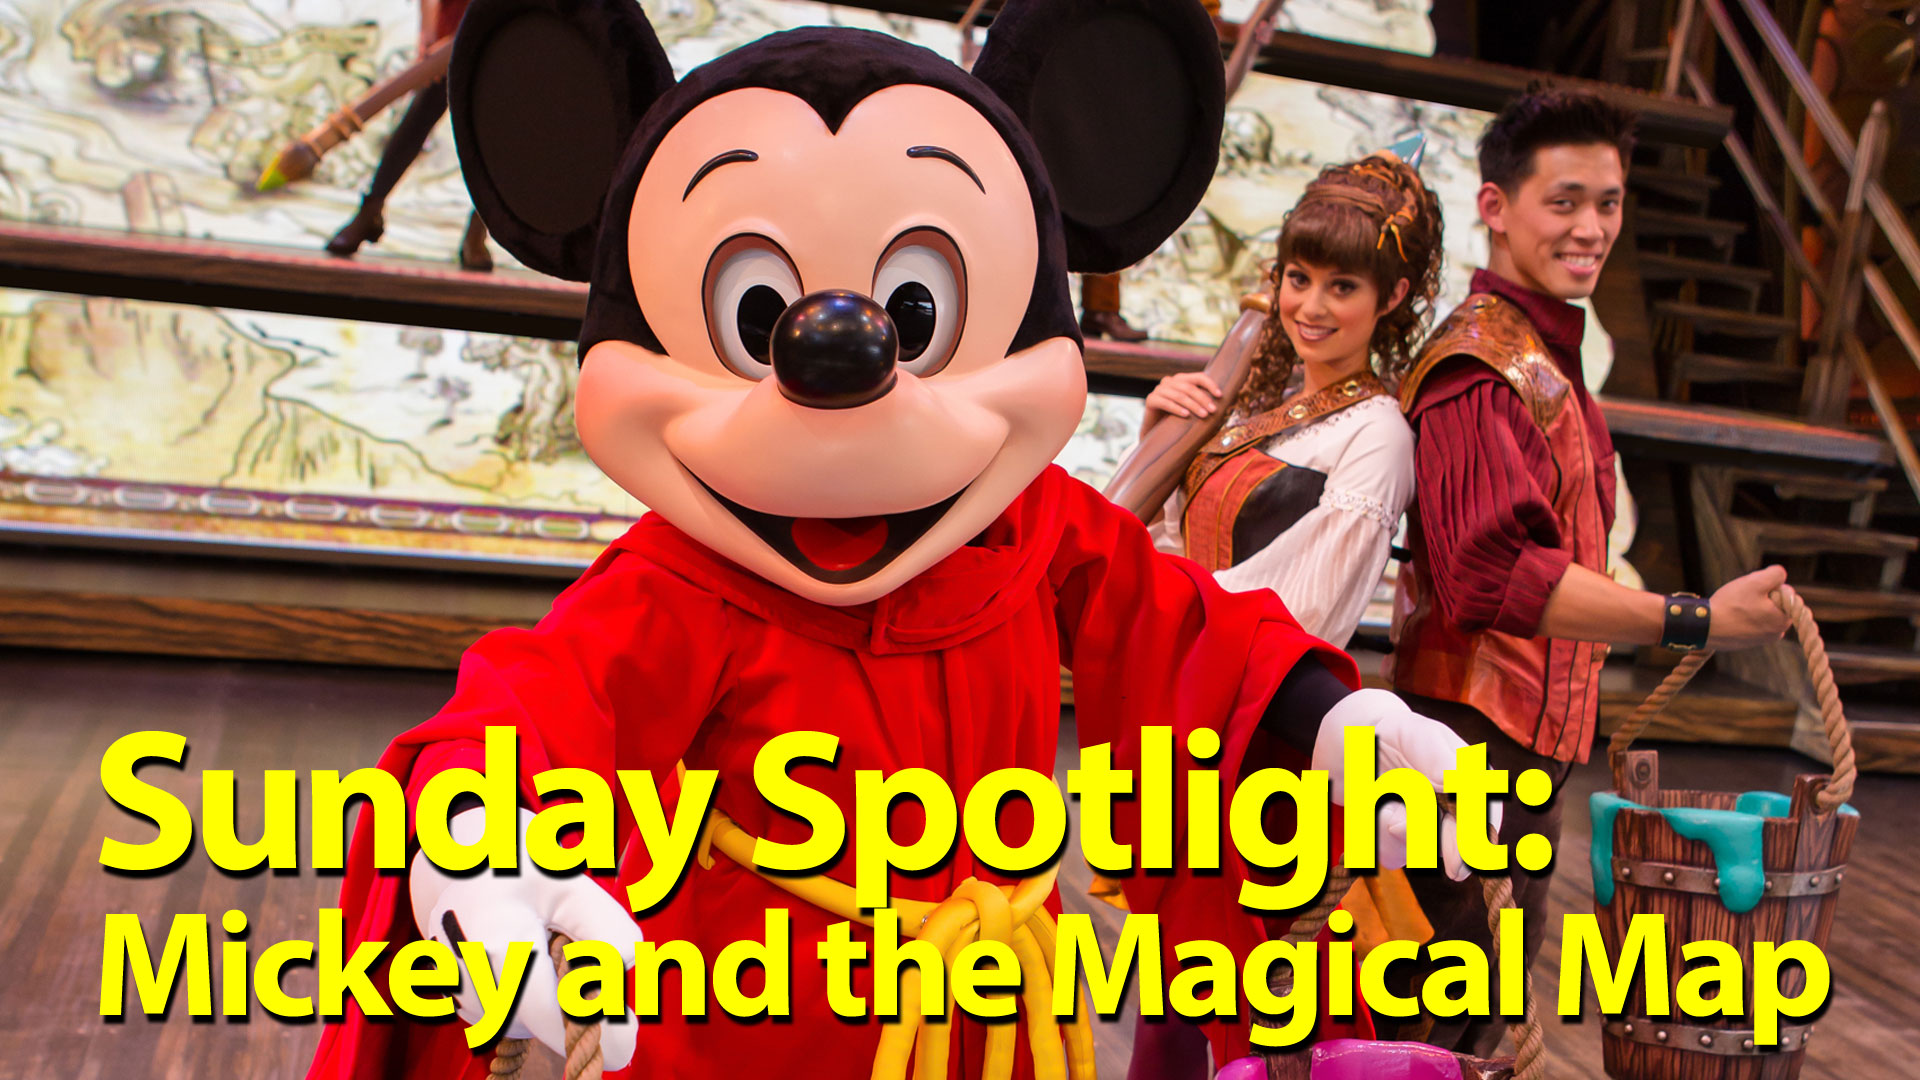 Sunday Spotlight: Mickey and Magical Map